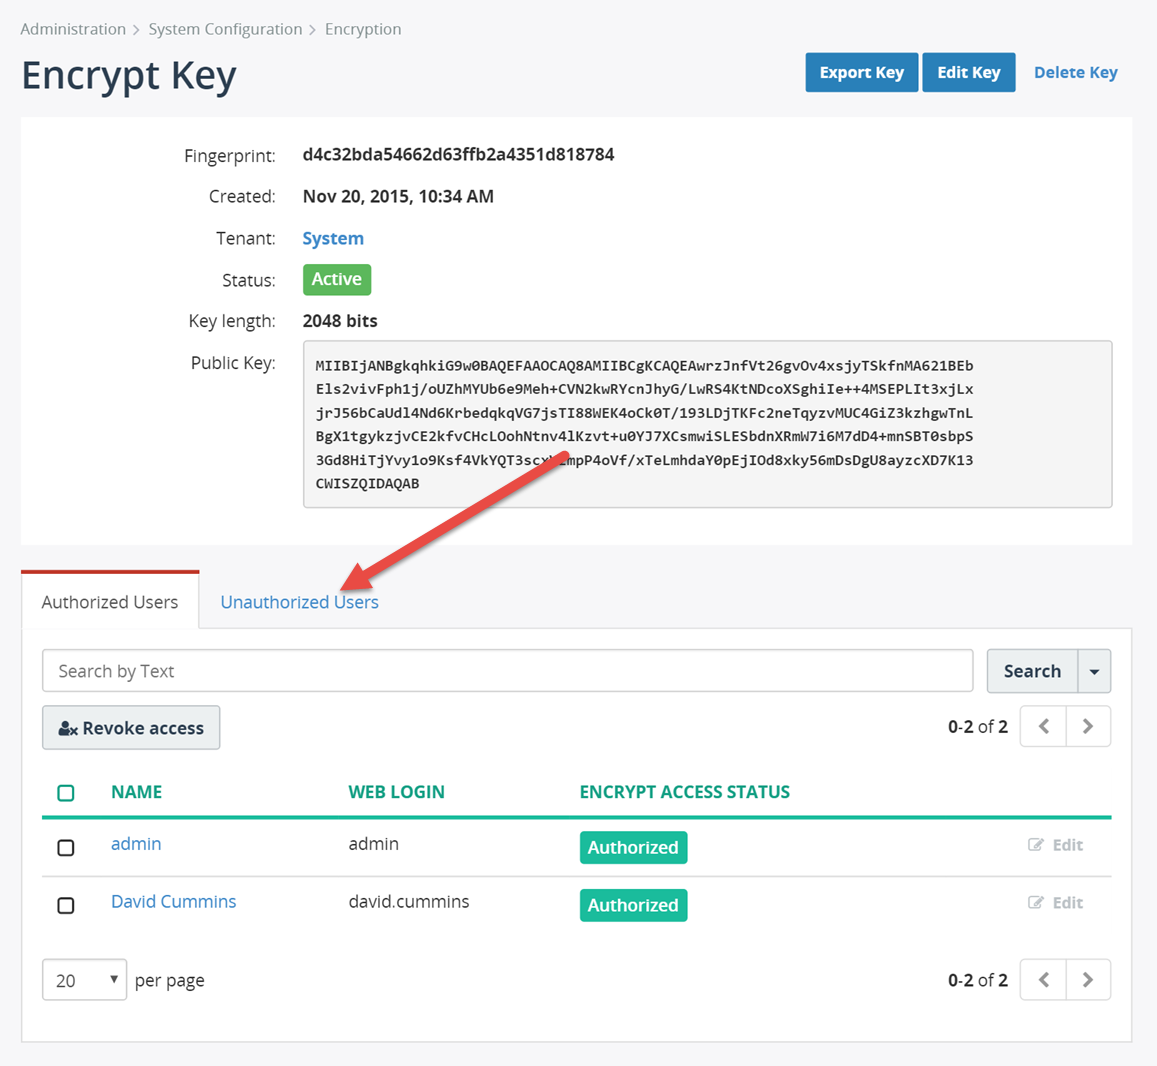 Grant access to encryption key